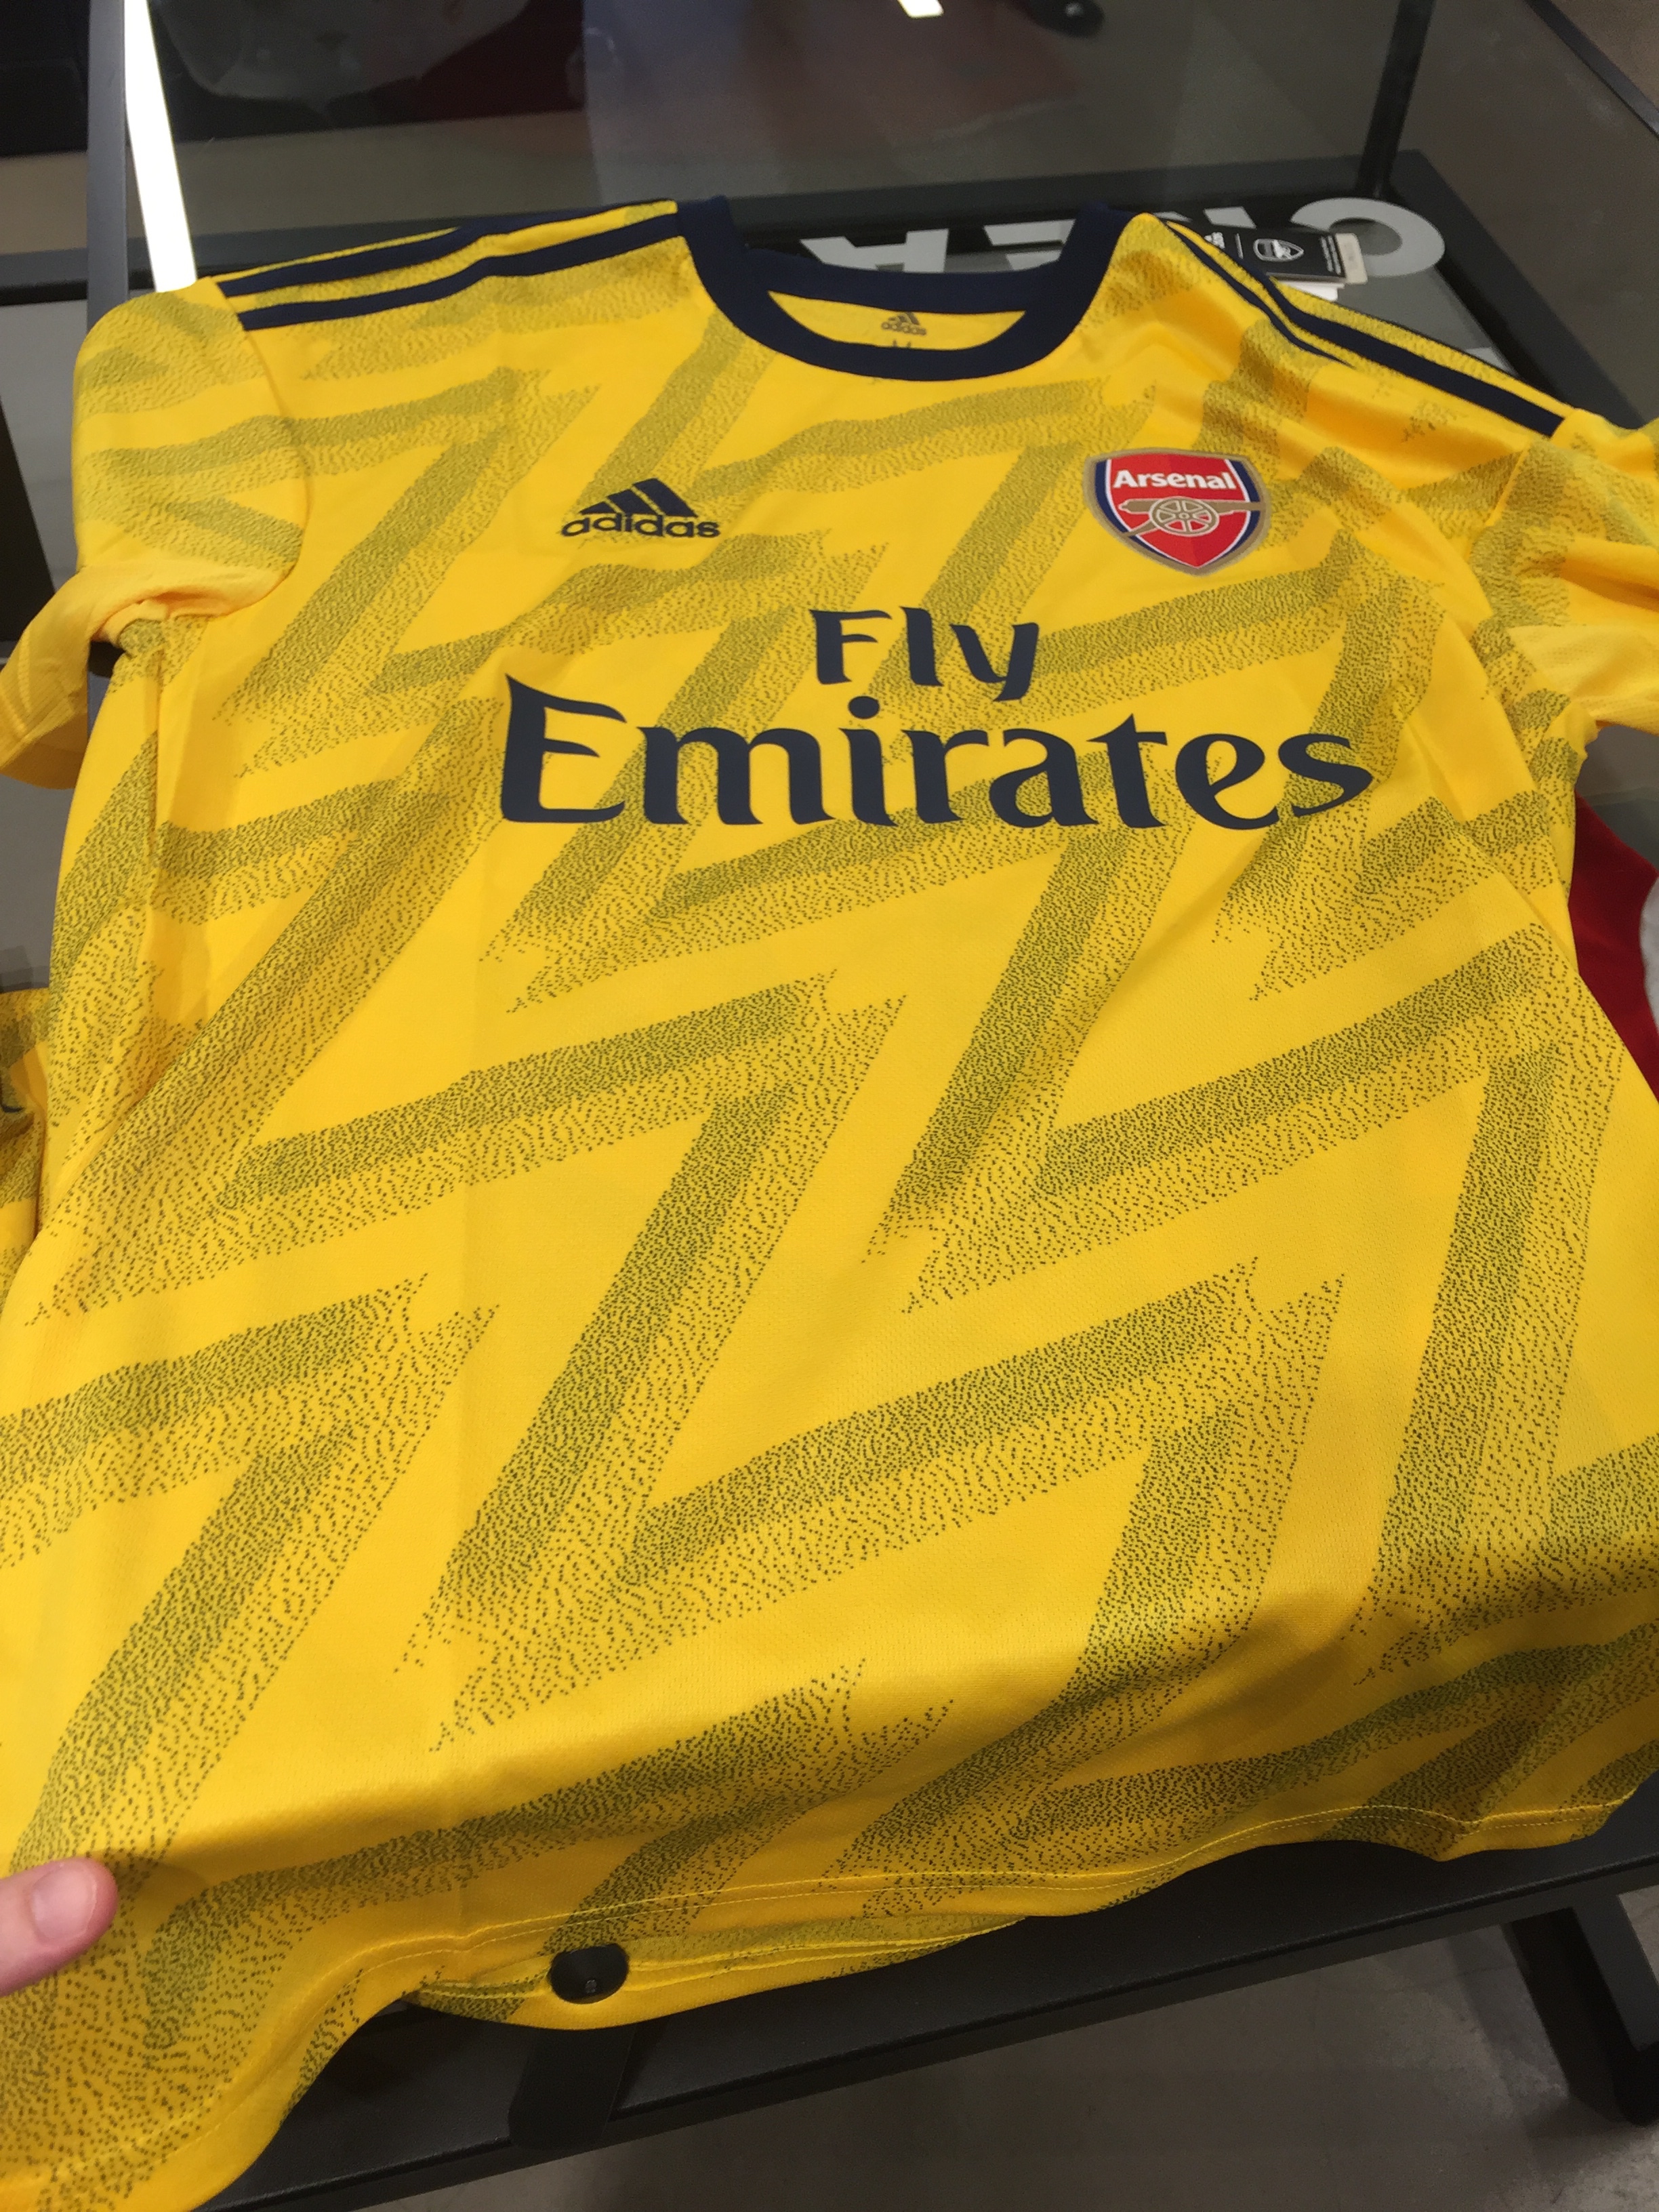 new arsenal kit yellow